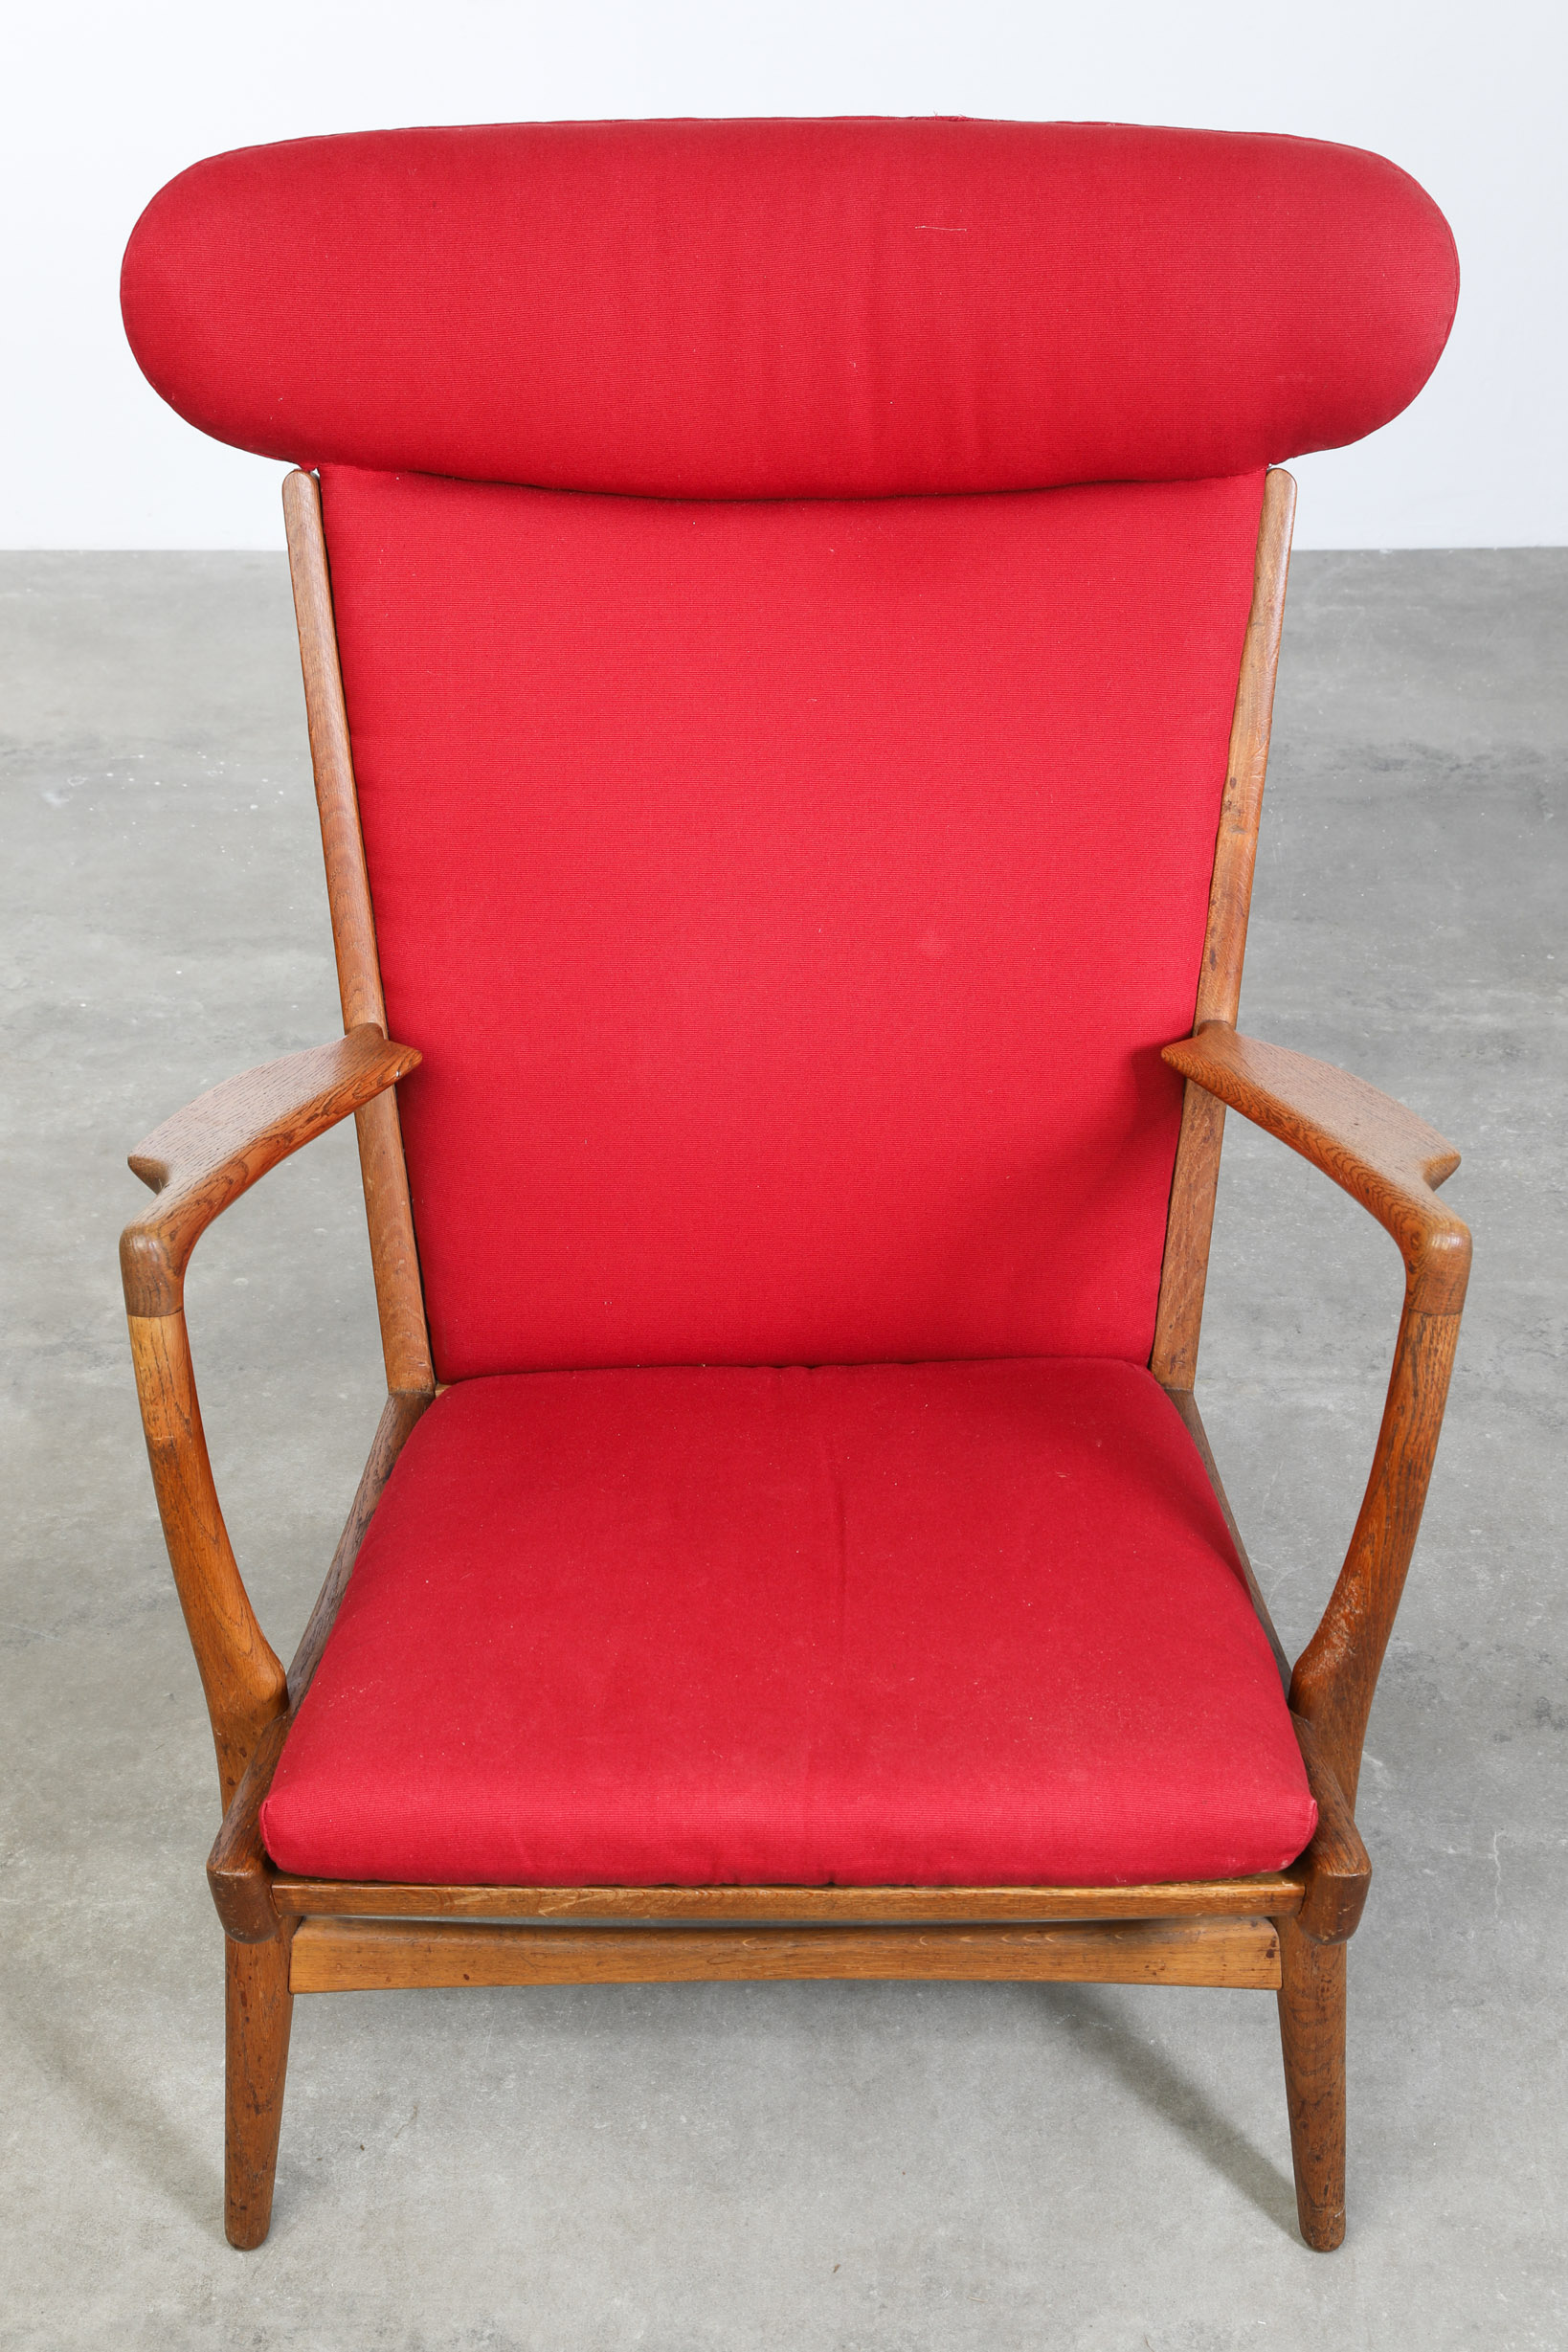 Hans J. Wegner, AP Stolen, Lounge Chair Model AP 15 - Image 2 of 6